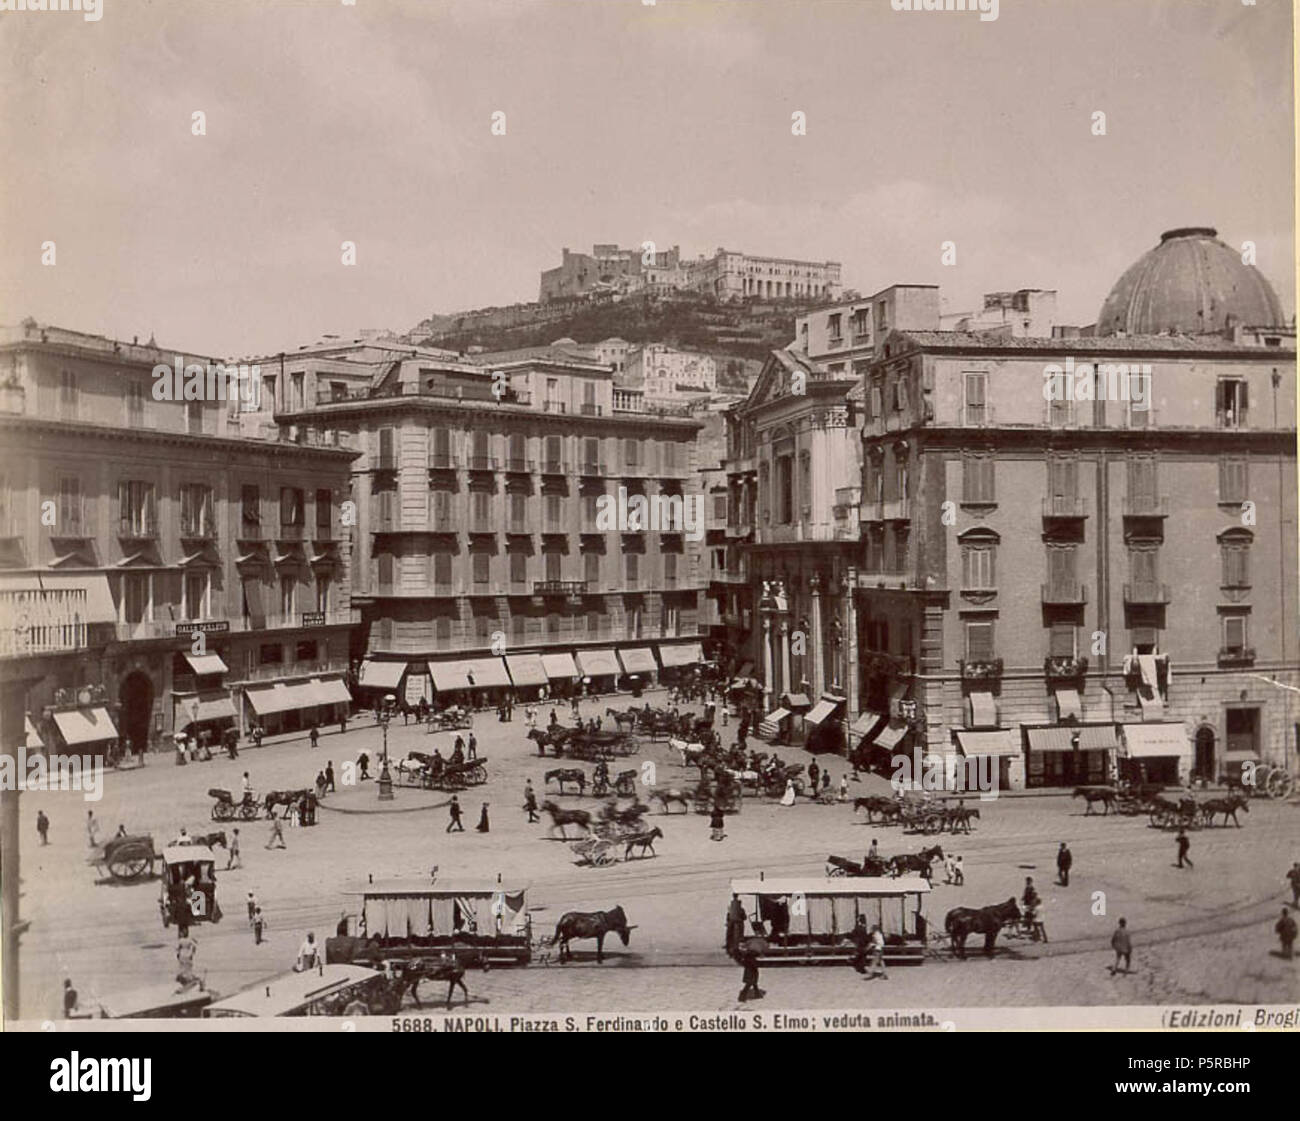 N/A. Fotógrafo italiano N/A 240 Brogi, GIACOMO (1822-1881) - n. 5688 - Napoli, Piazza S. Ferdinando e Castello S. Elmo - veduta animata Foto de stock